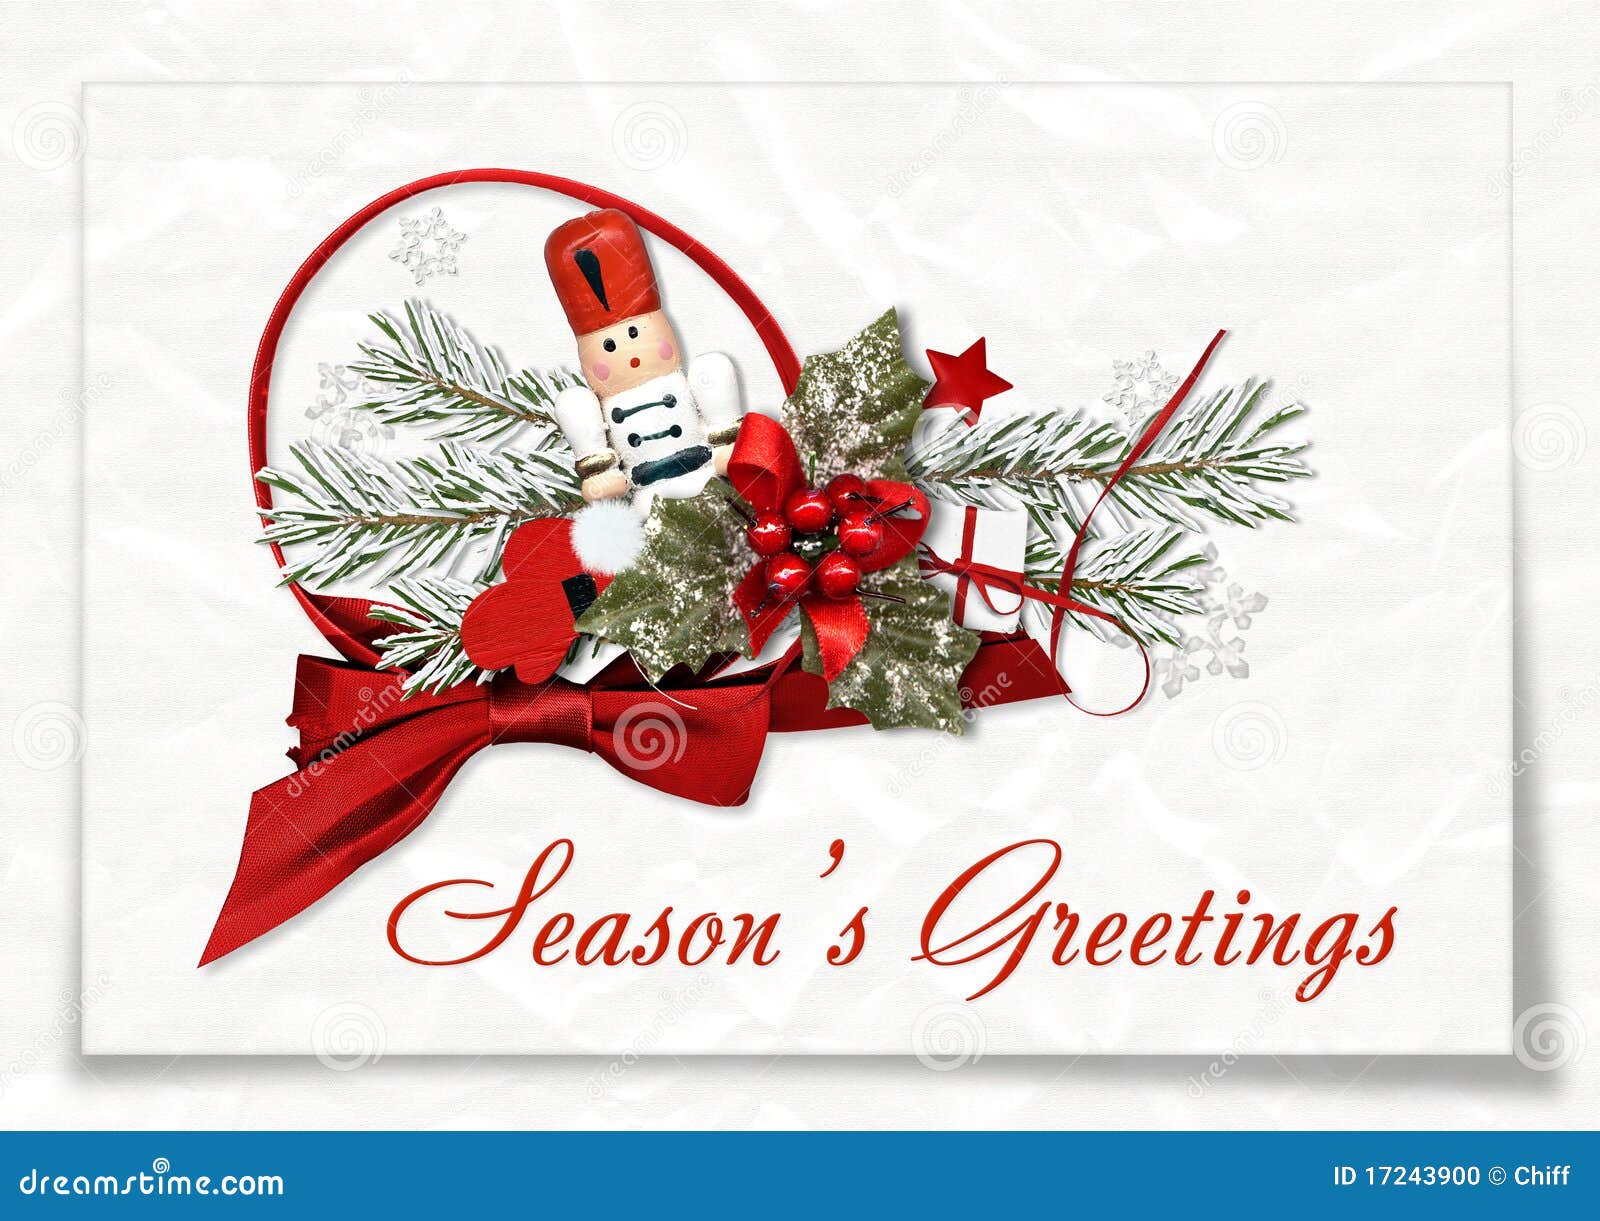 Christmas greeting card stock illustration. Image of 